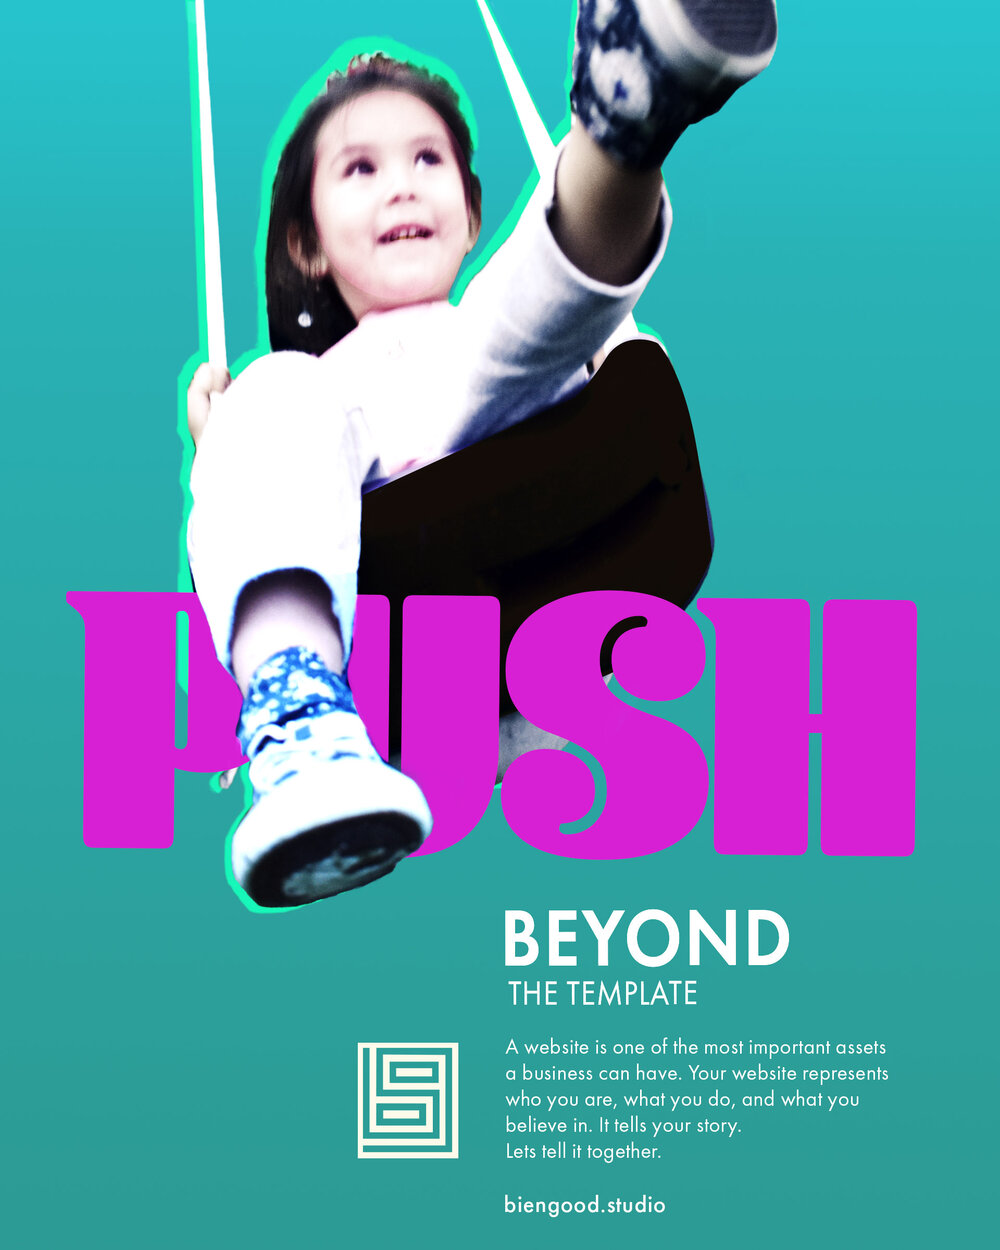 PUSH BEYOND Print Ad / 24” x 30” / Digital Photography, Photoshop